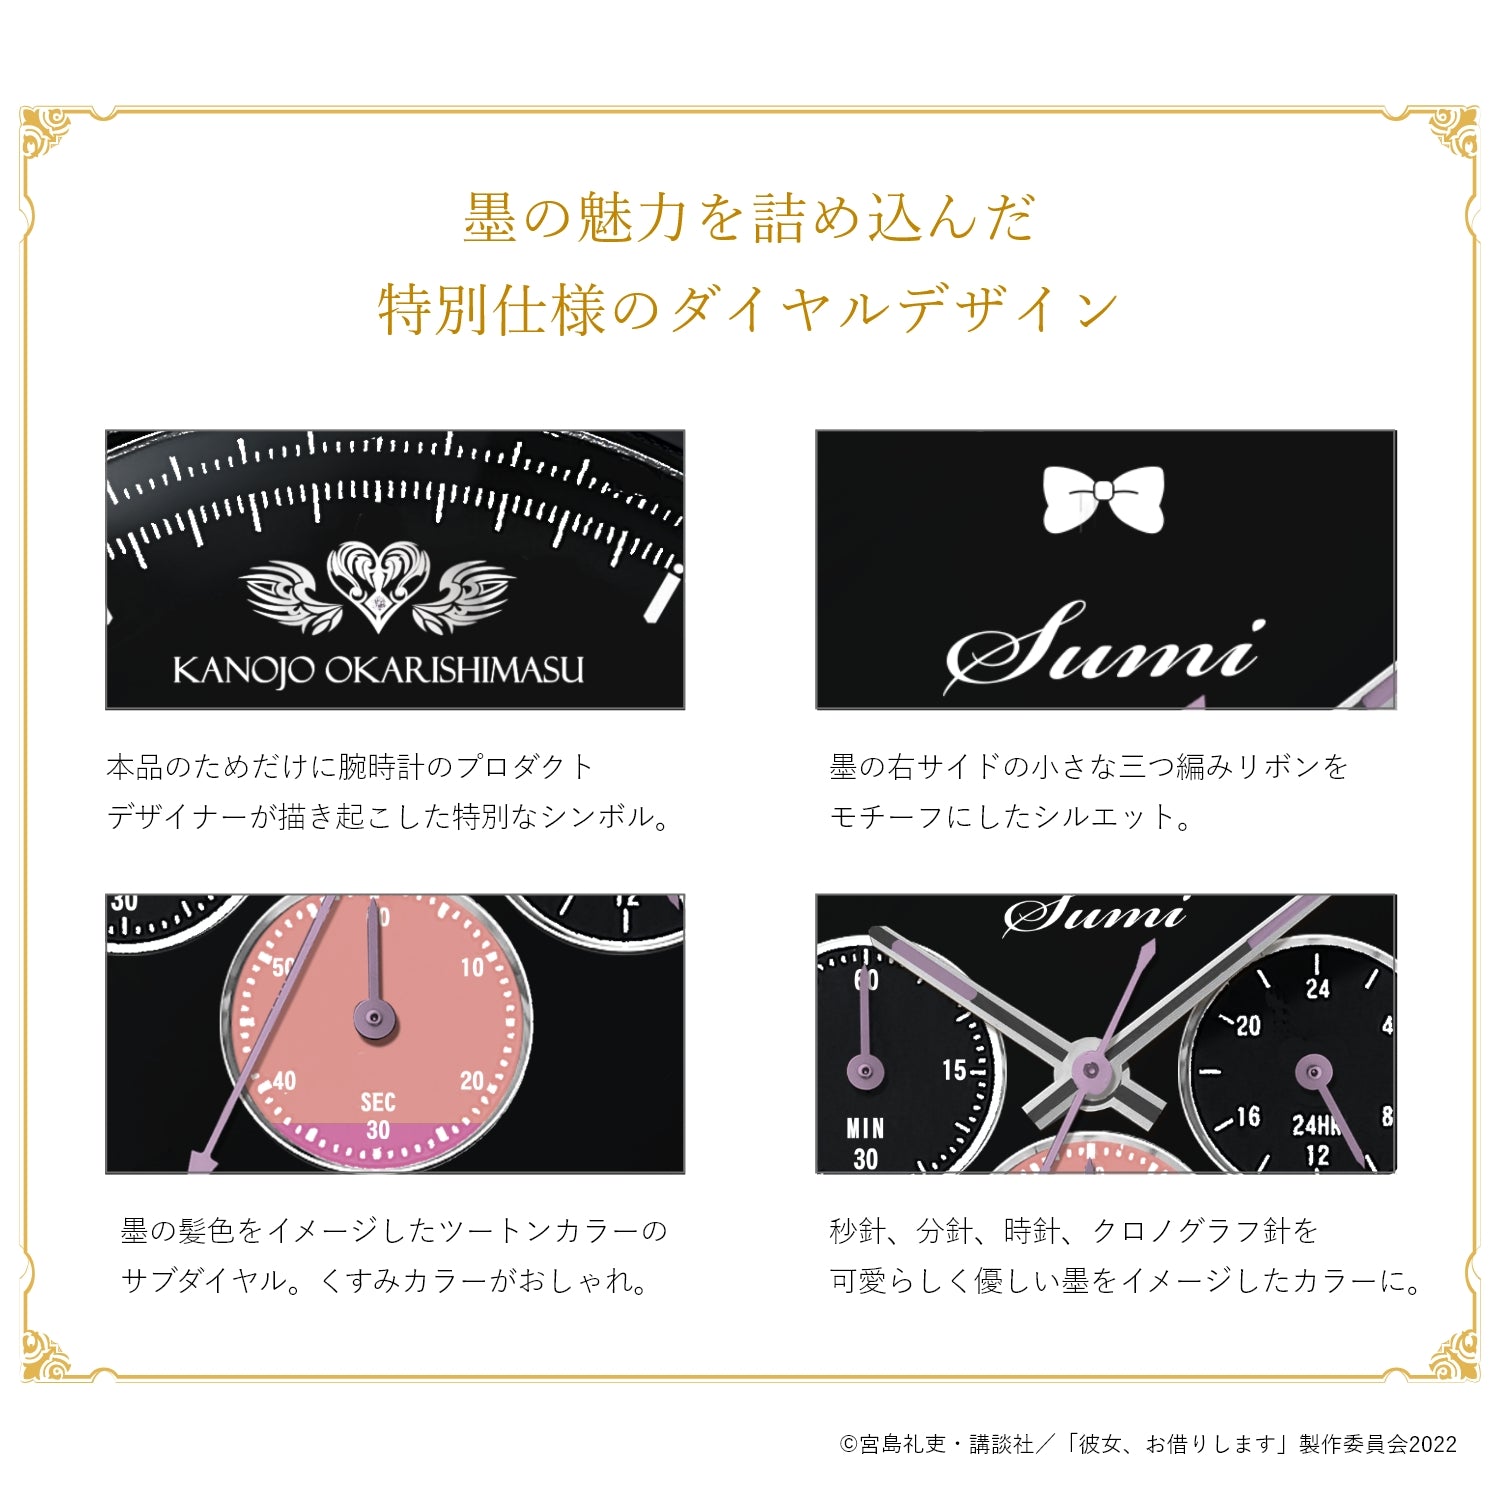 Rent-A-Girlfriend Chronograph wristwatch|Sumi Sakurasawa